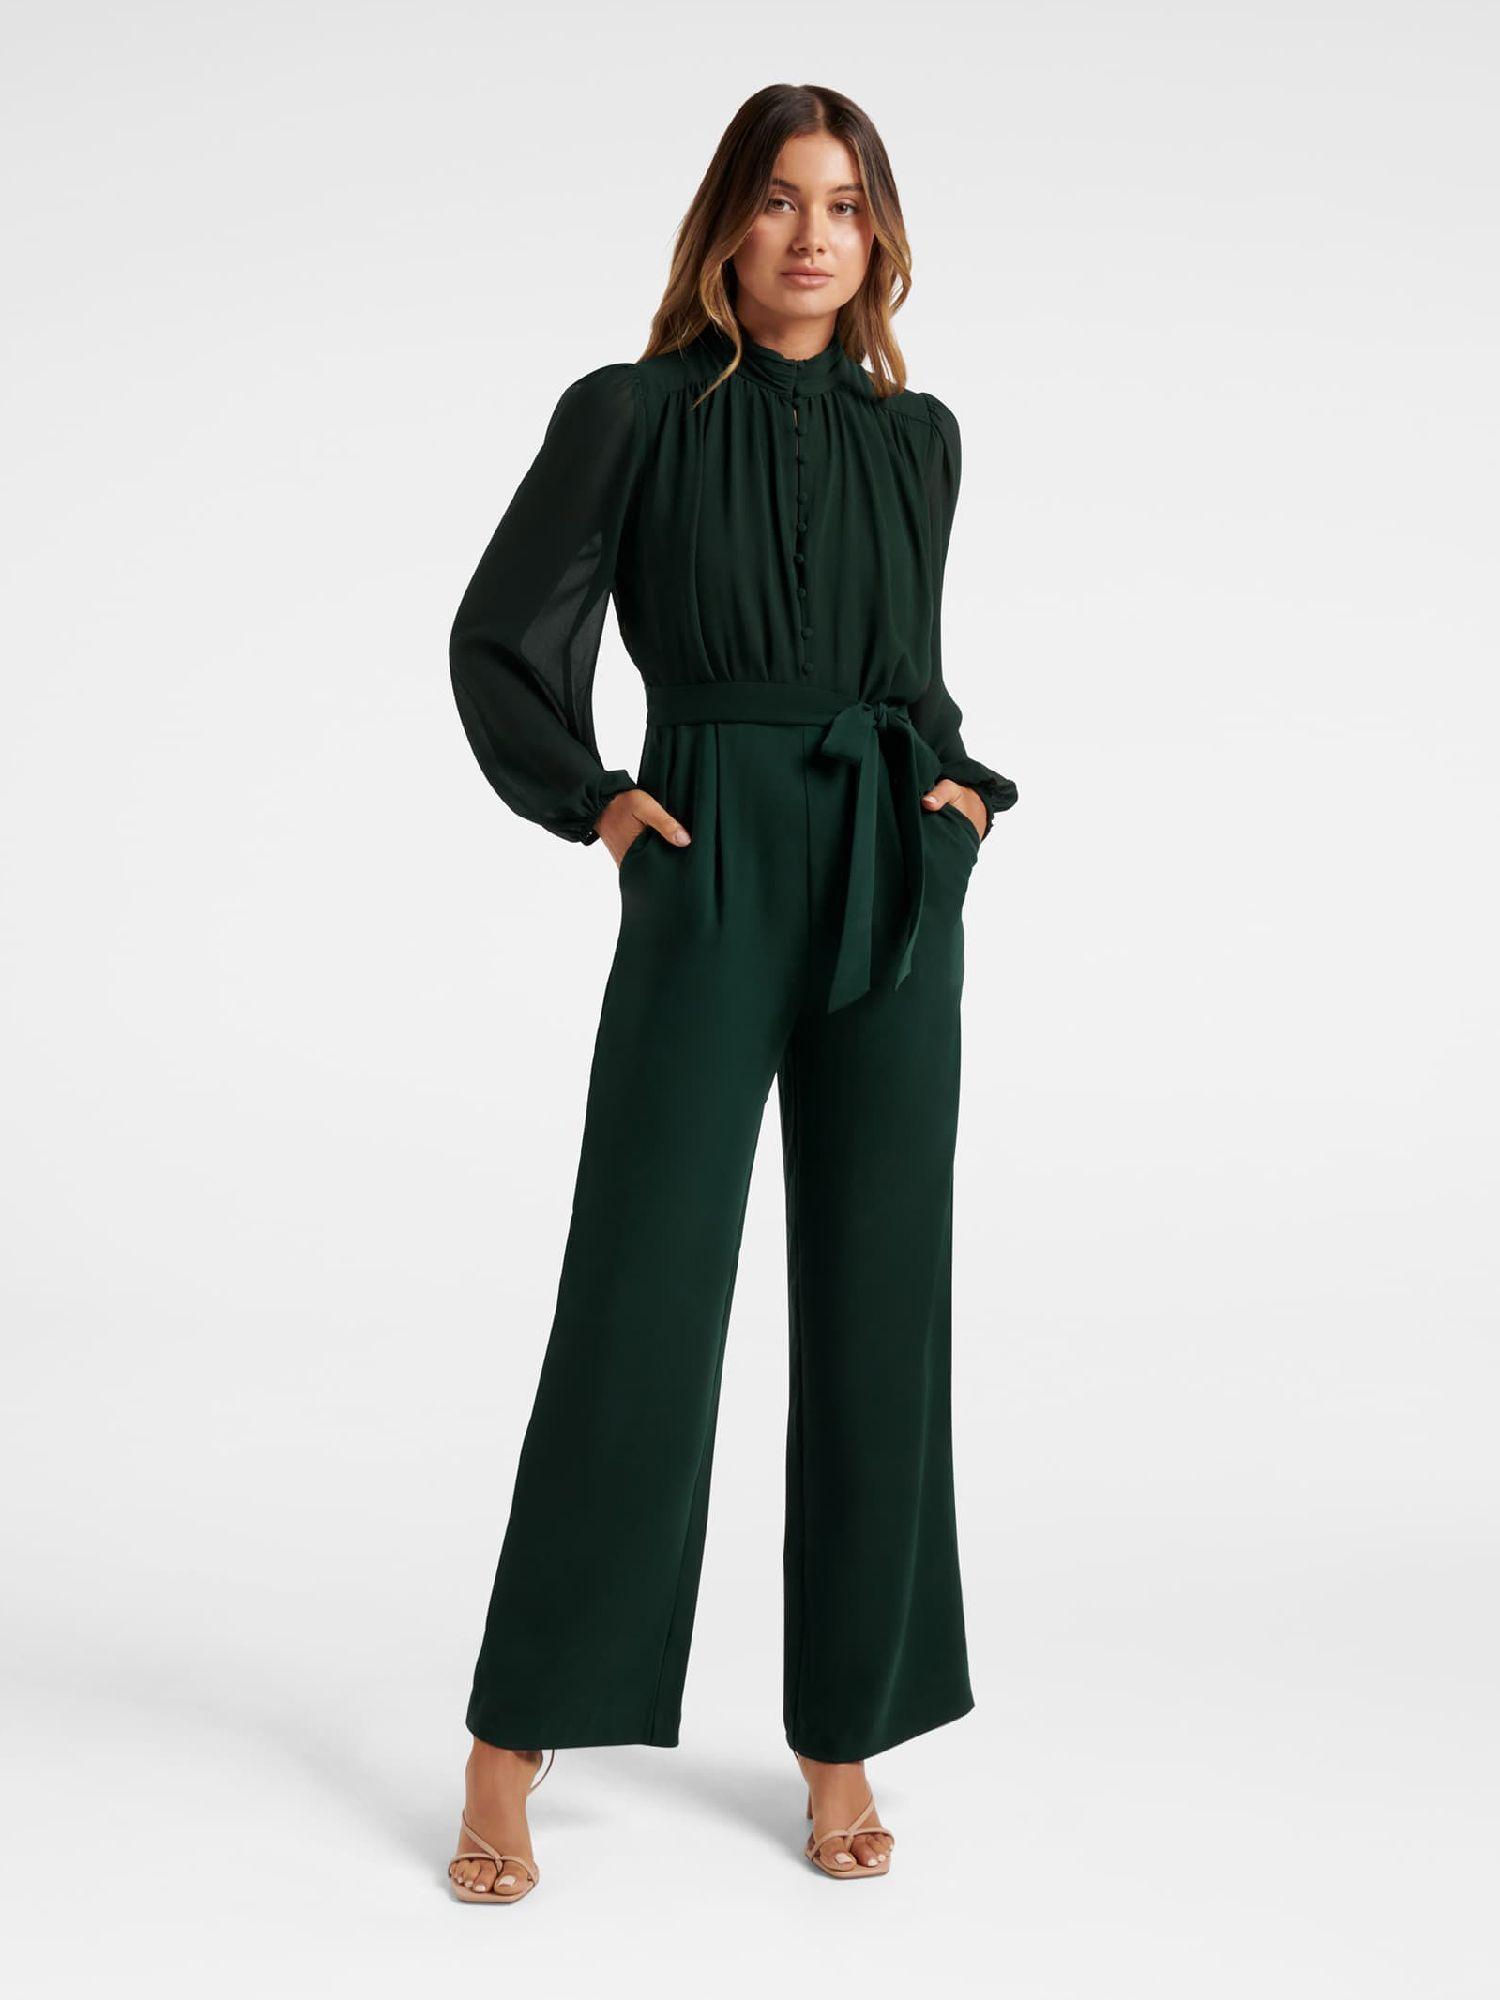 dark green lana button up blouse jumpsuit